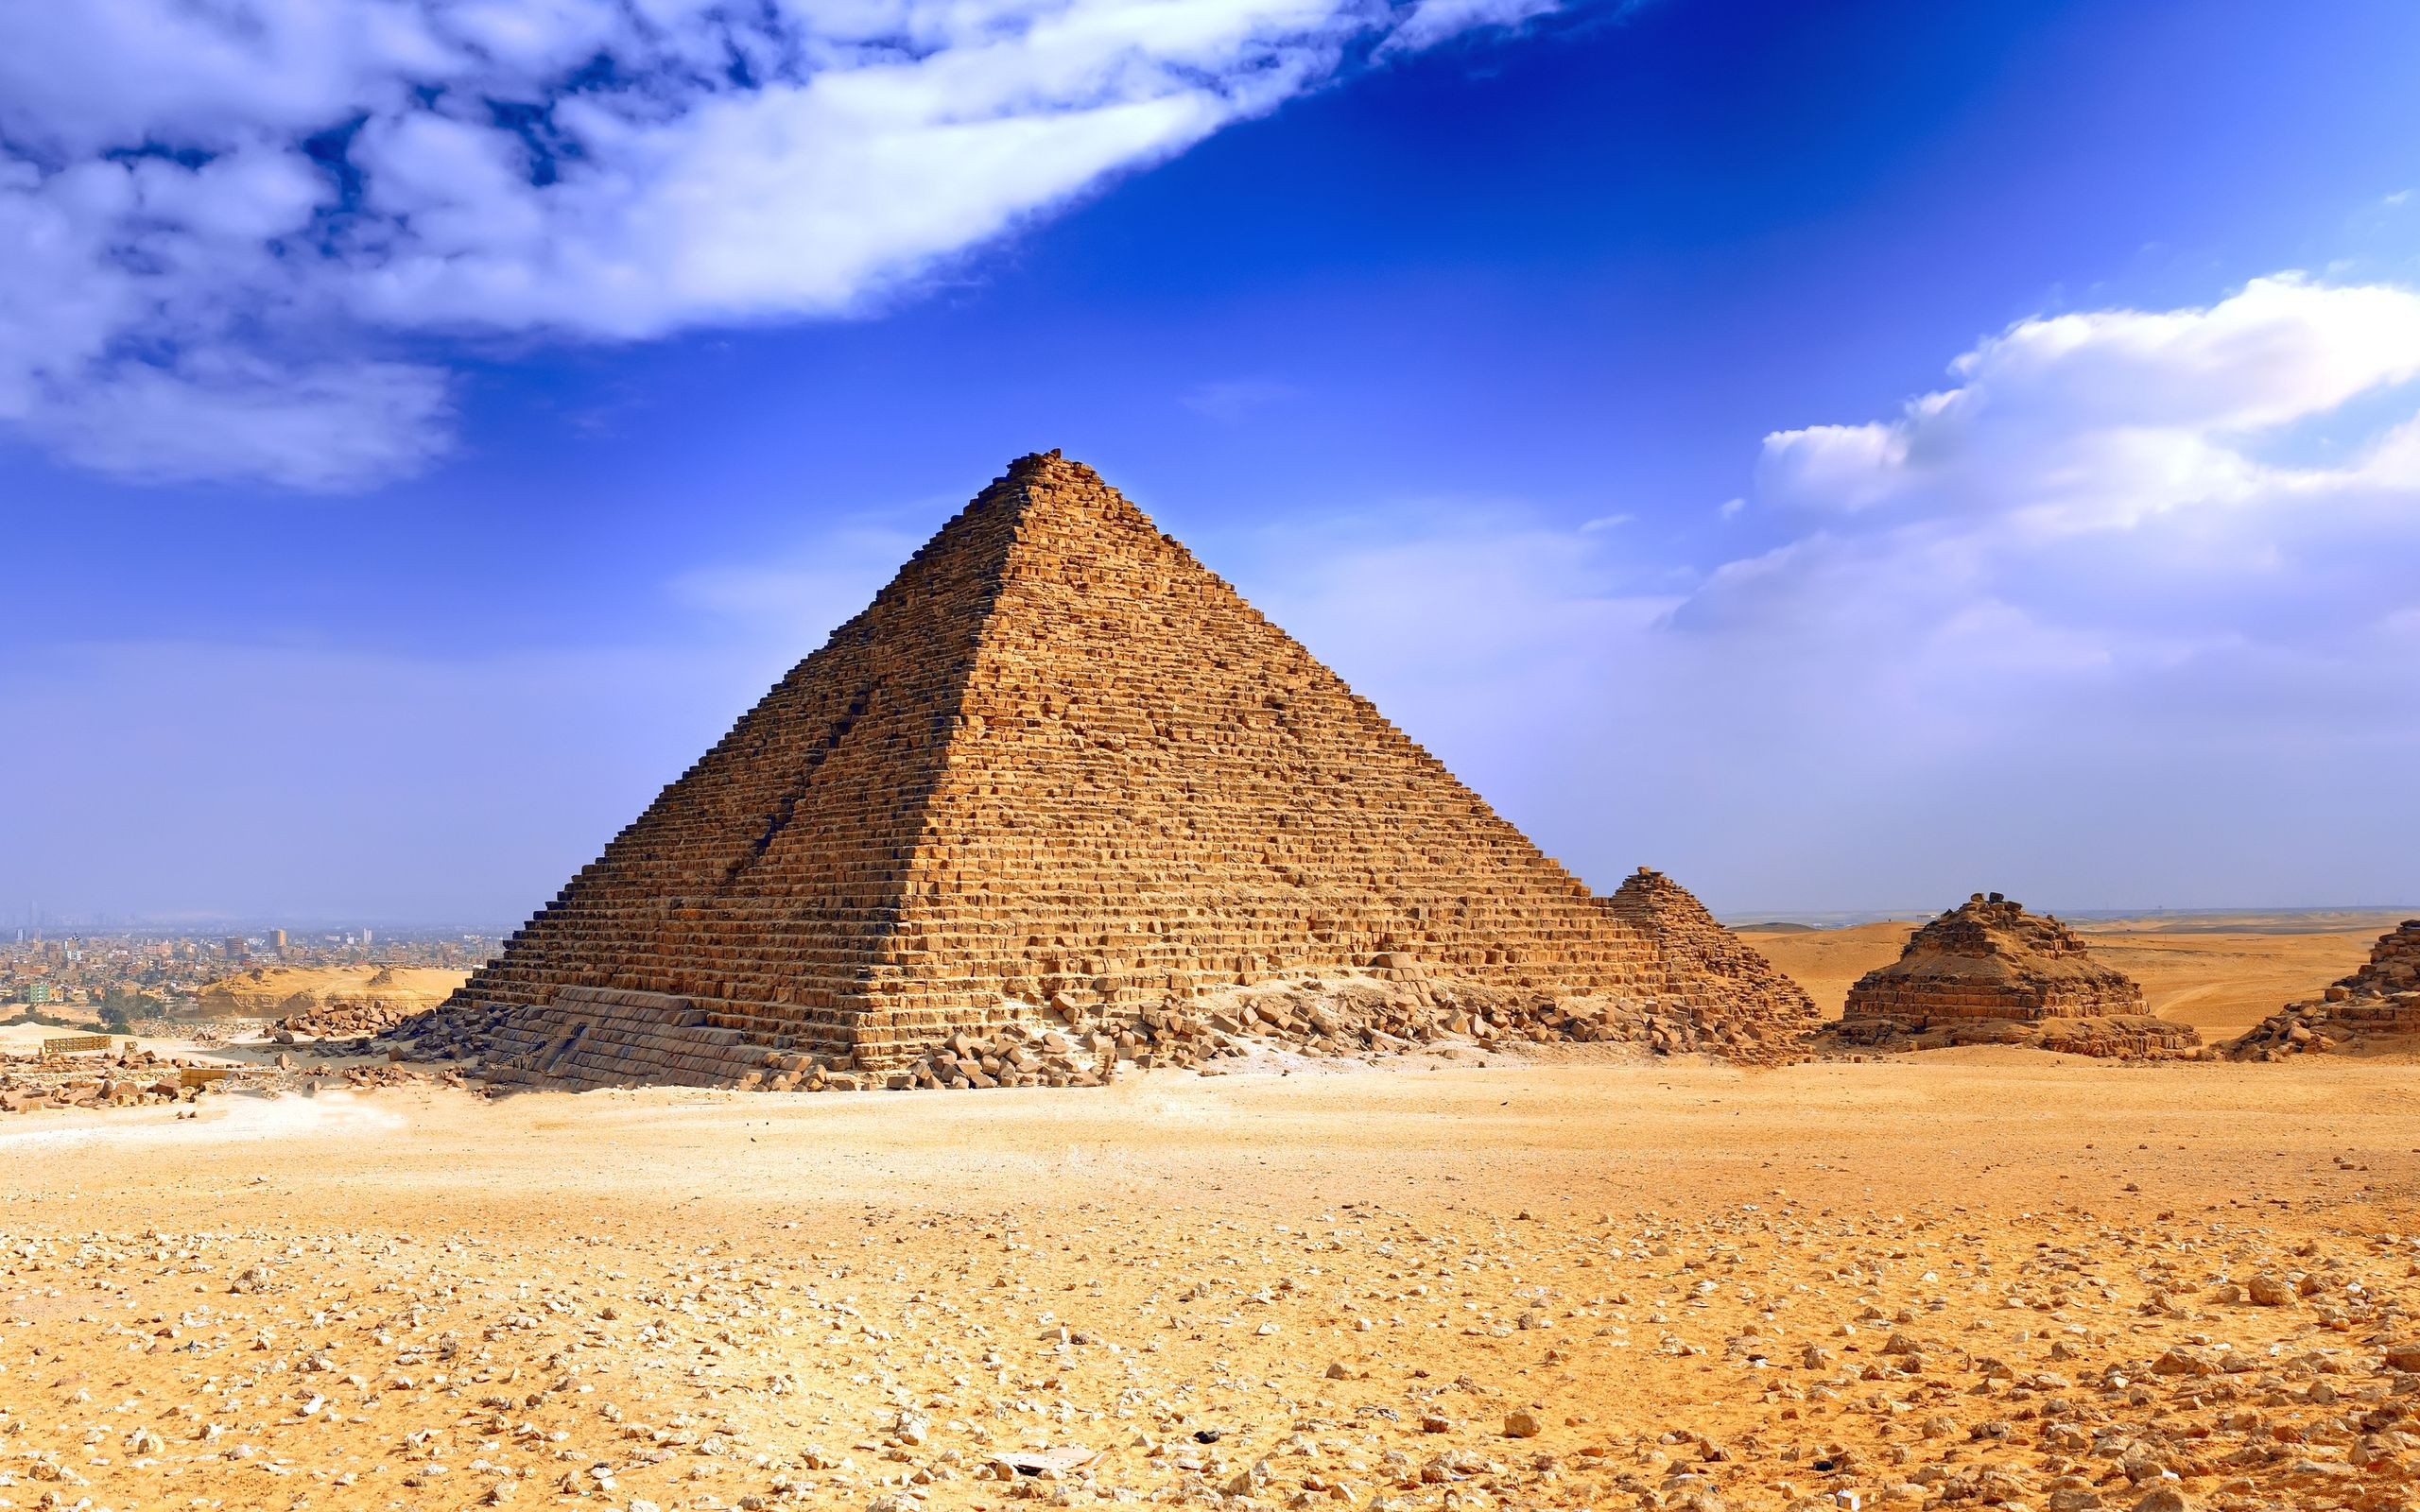 General 2560x1600 Pyramids of Giza sky pyramid Egypt history ancient landmark Africa